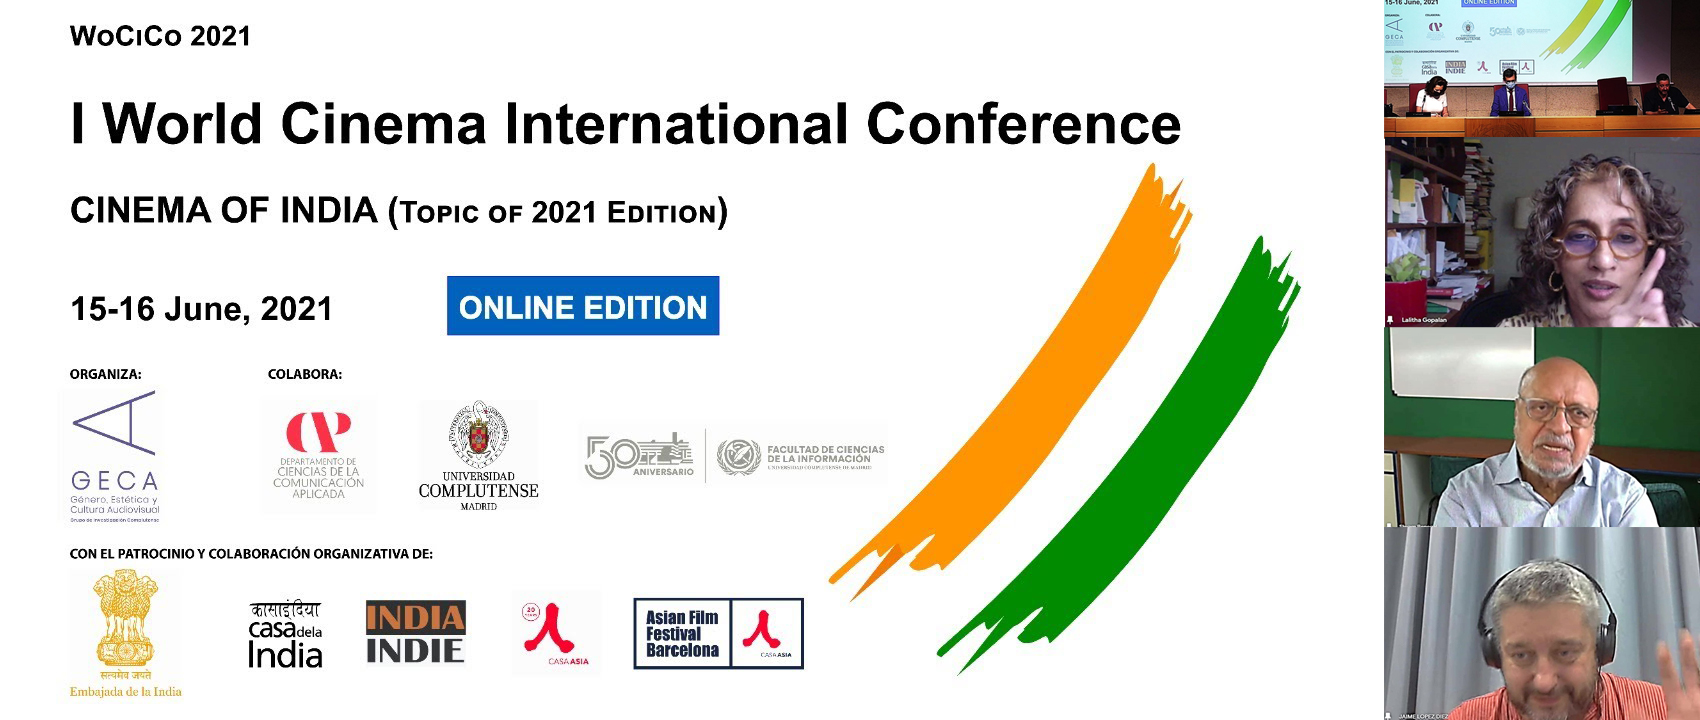 I World Cinema International Conference